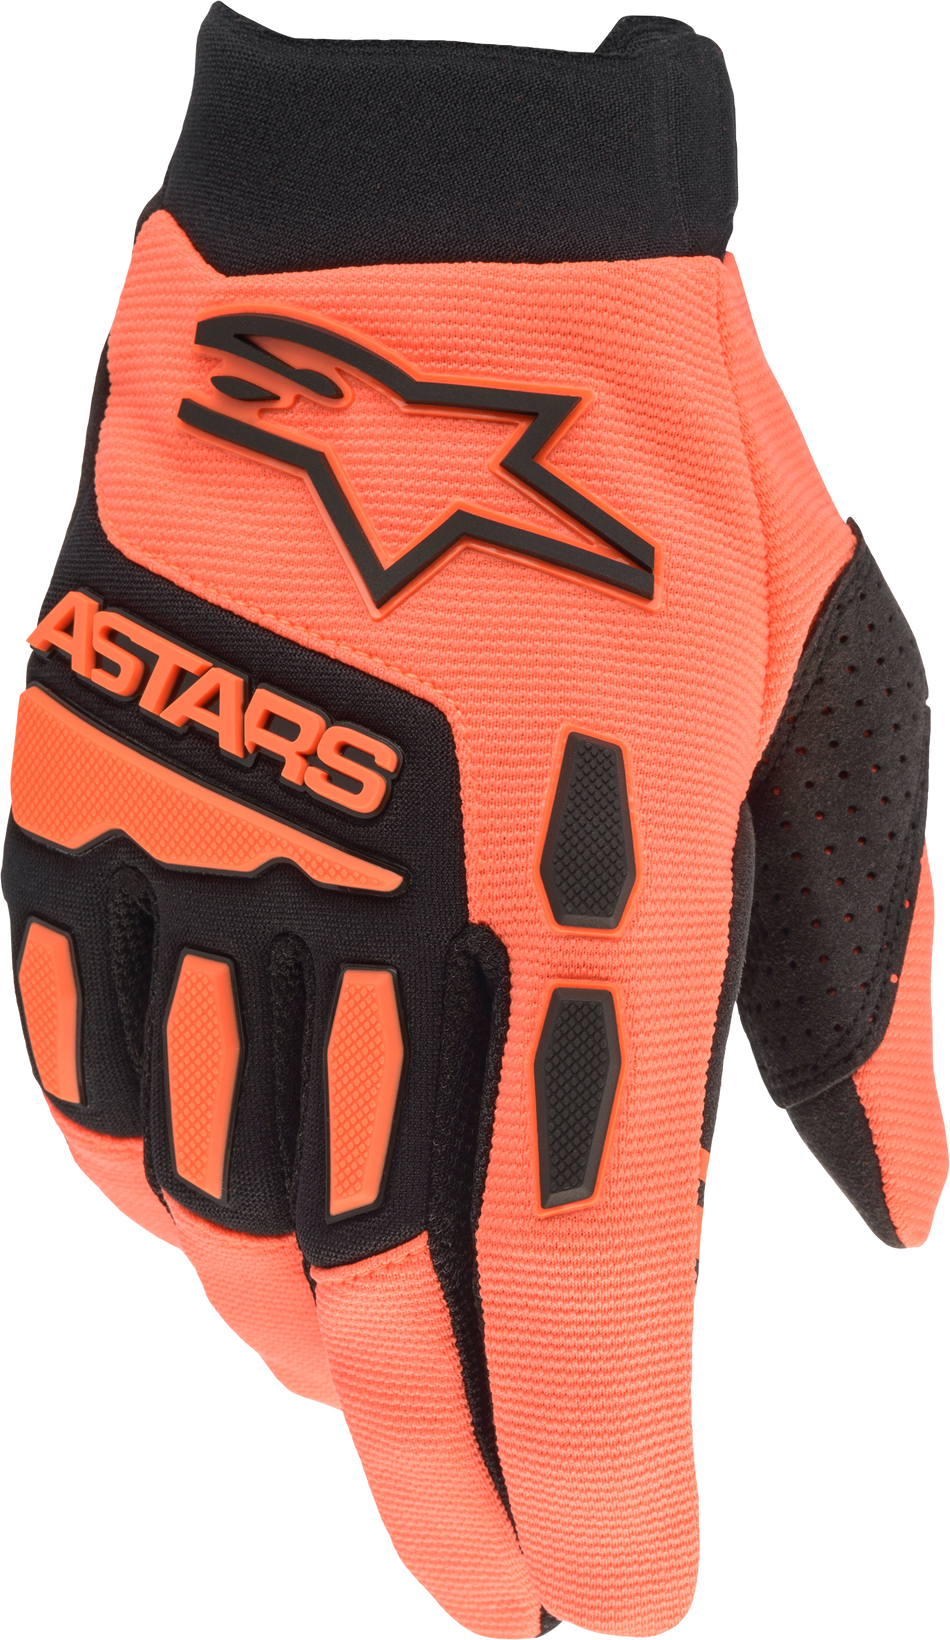 ALPINESTARS Full Bore Gloves Orange/Black Md 3563622-41-M